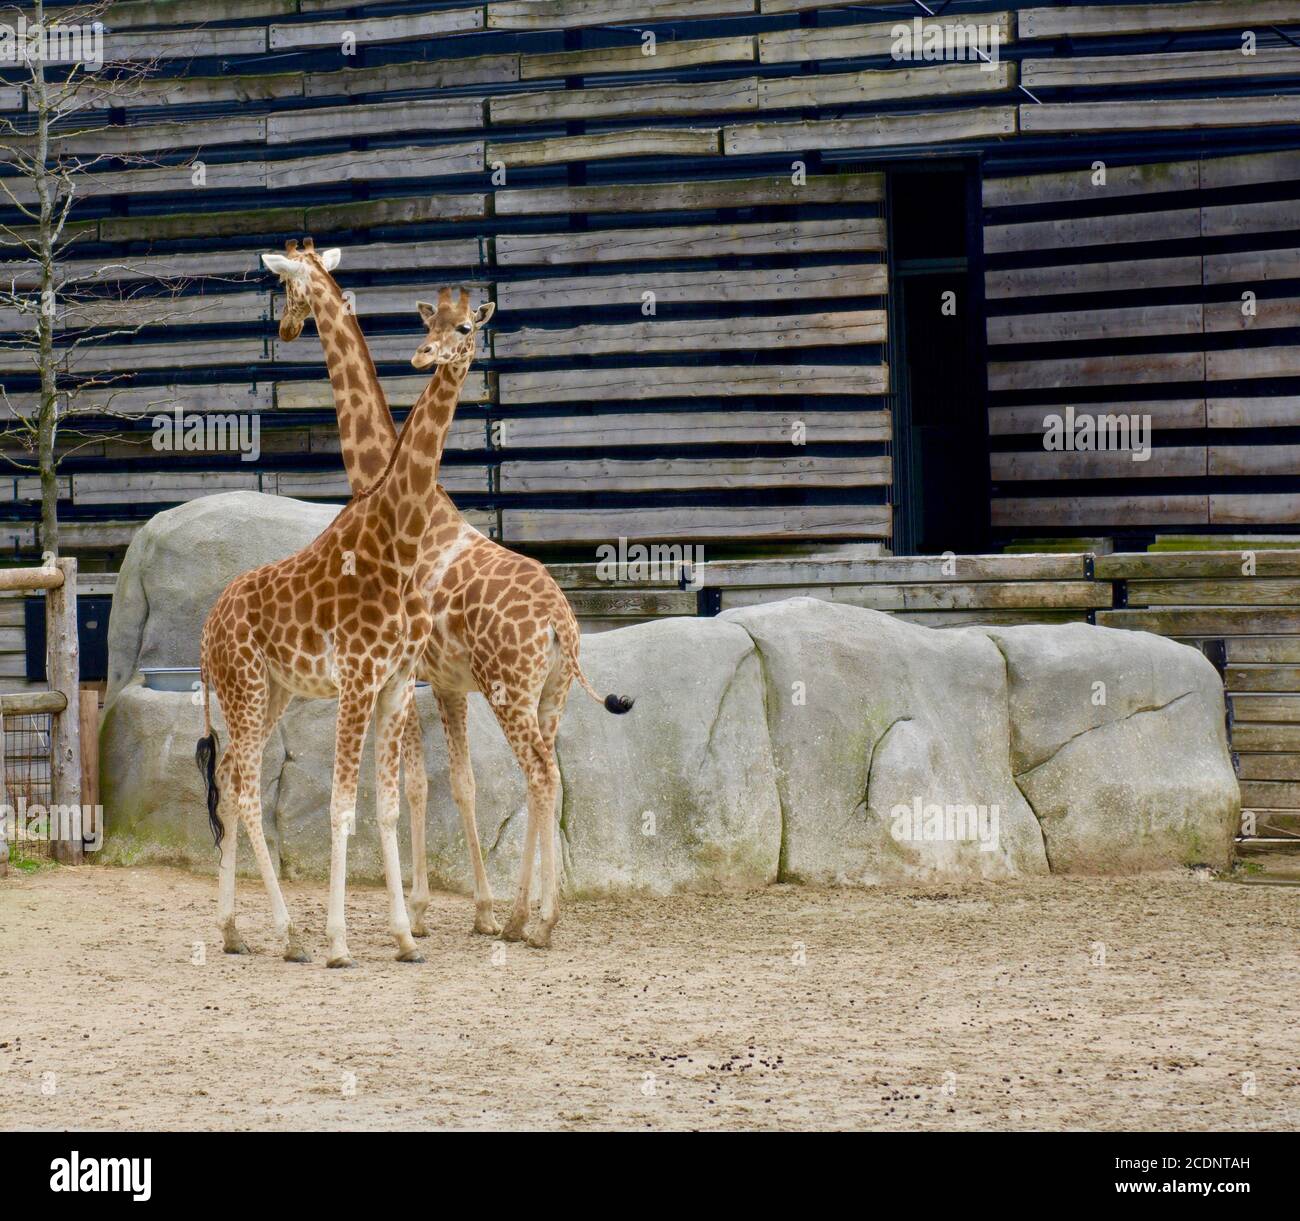 giraffe zoo de paris Banque D'Images